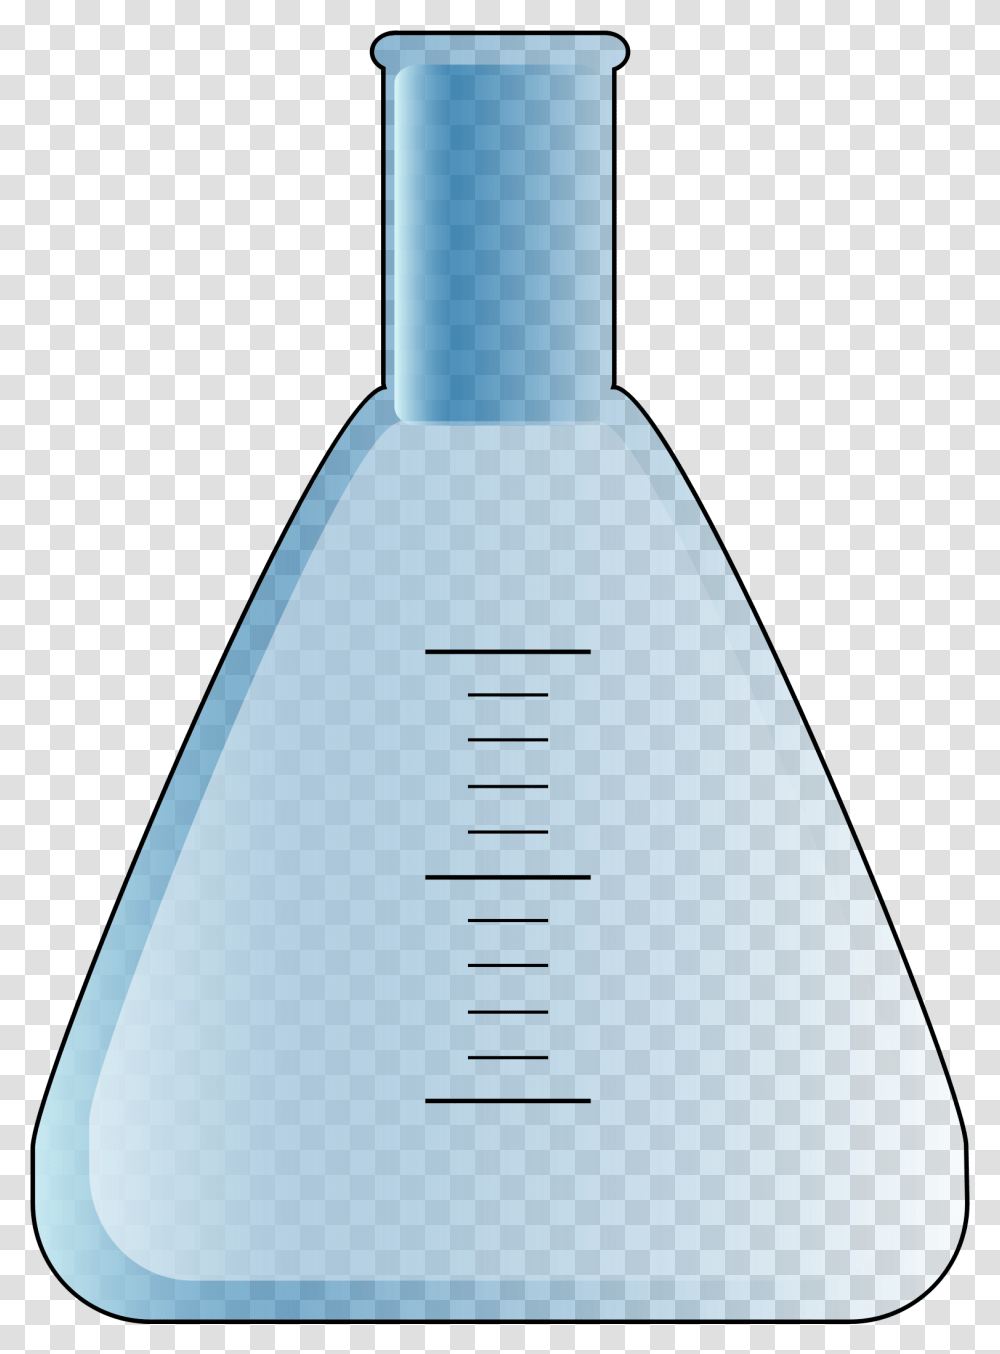 Erlenmeyer Flasks Objetos De Qumica, Bottle, Gas Pump, Machine, Bowl Transparent Png